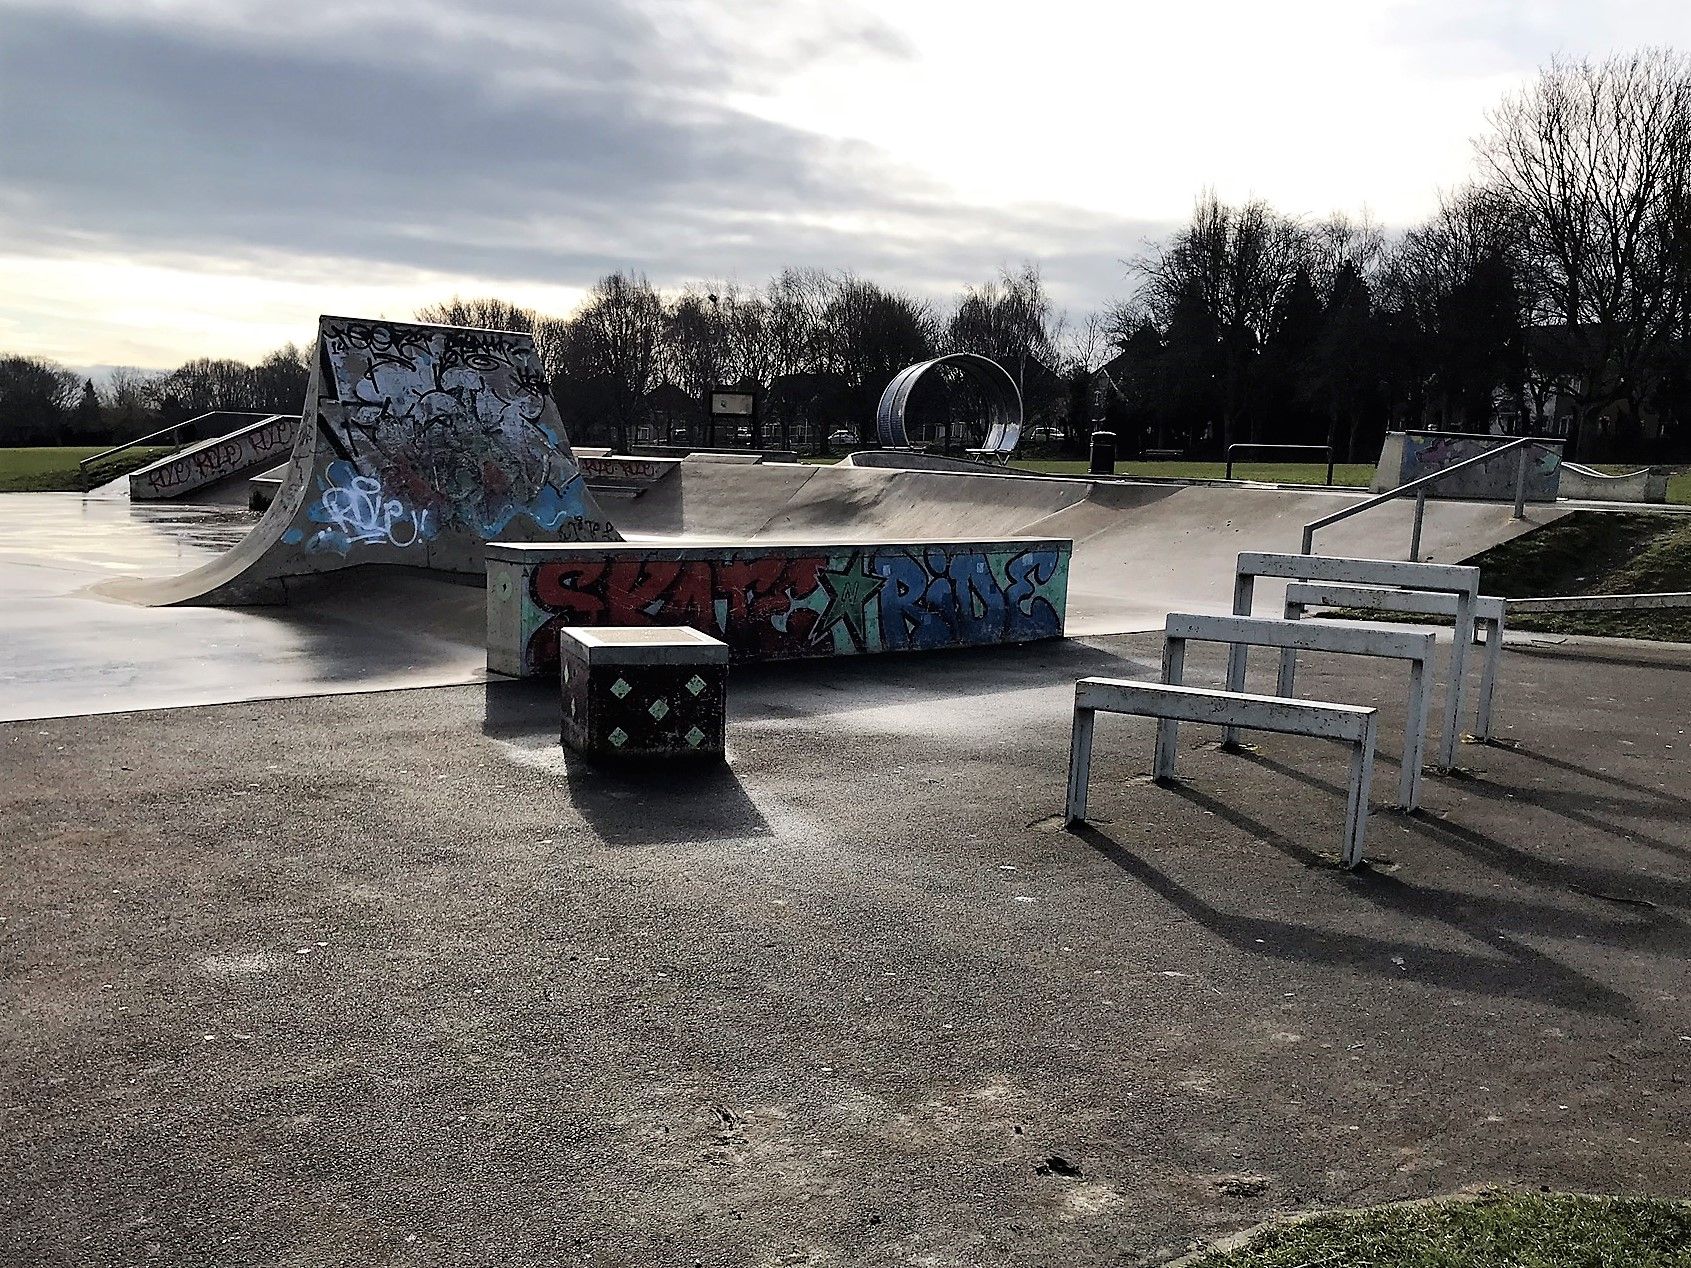 Skate park ramps and grind bars